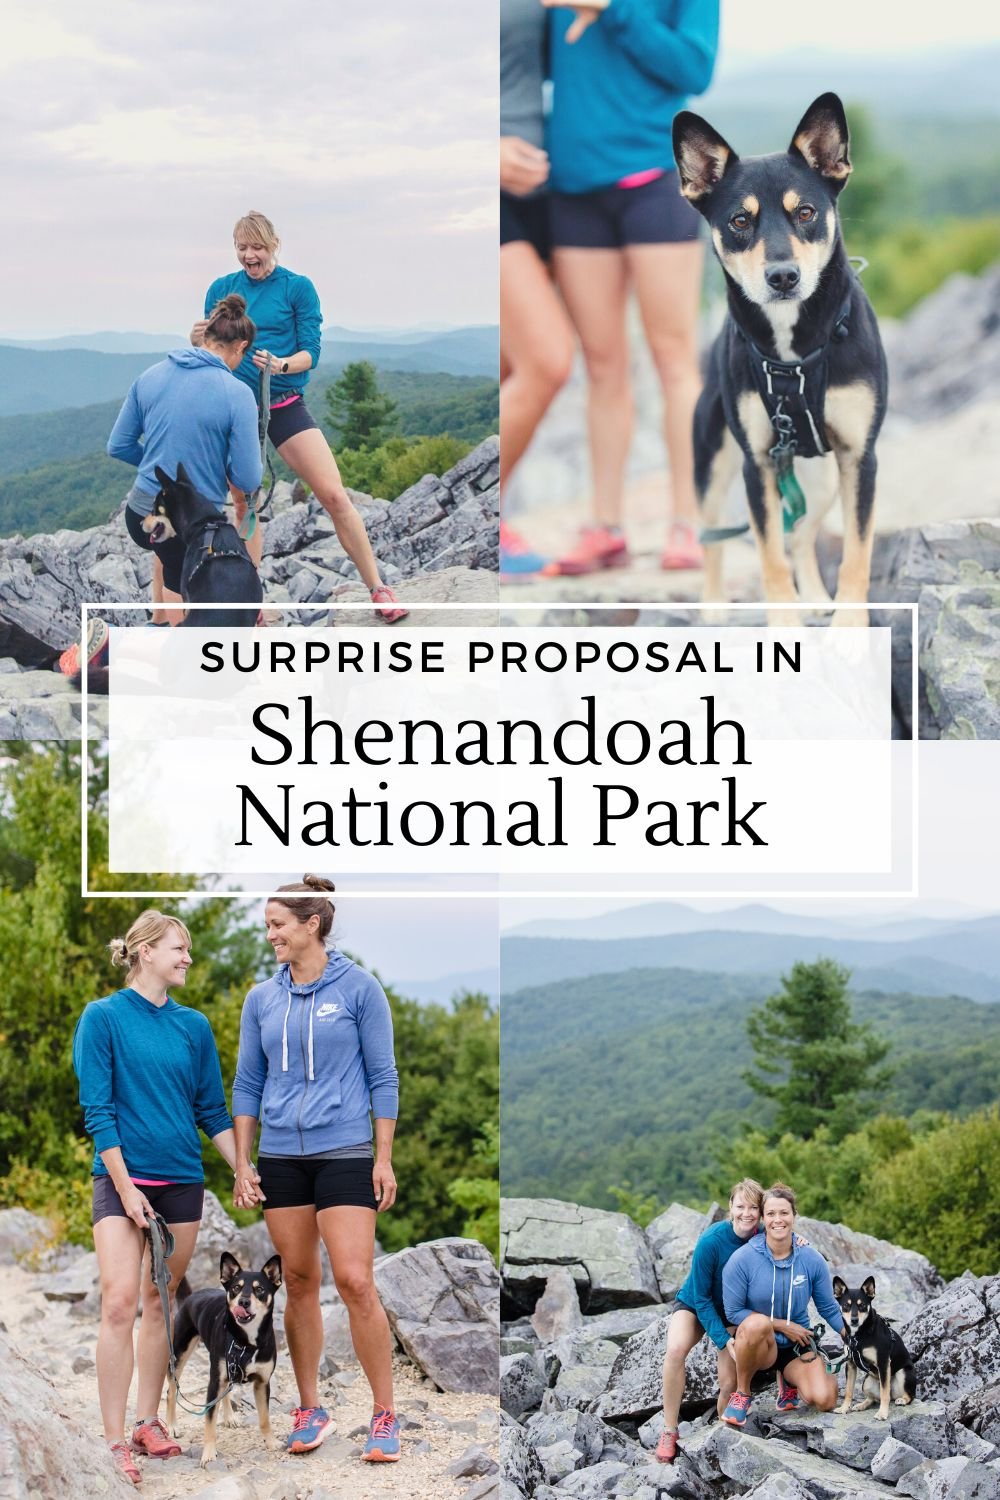 Surprise proposal in Shenandoah